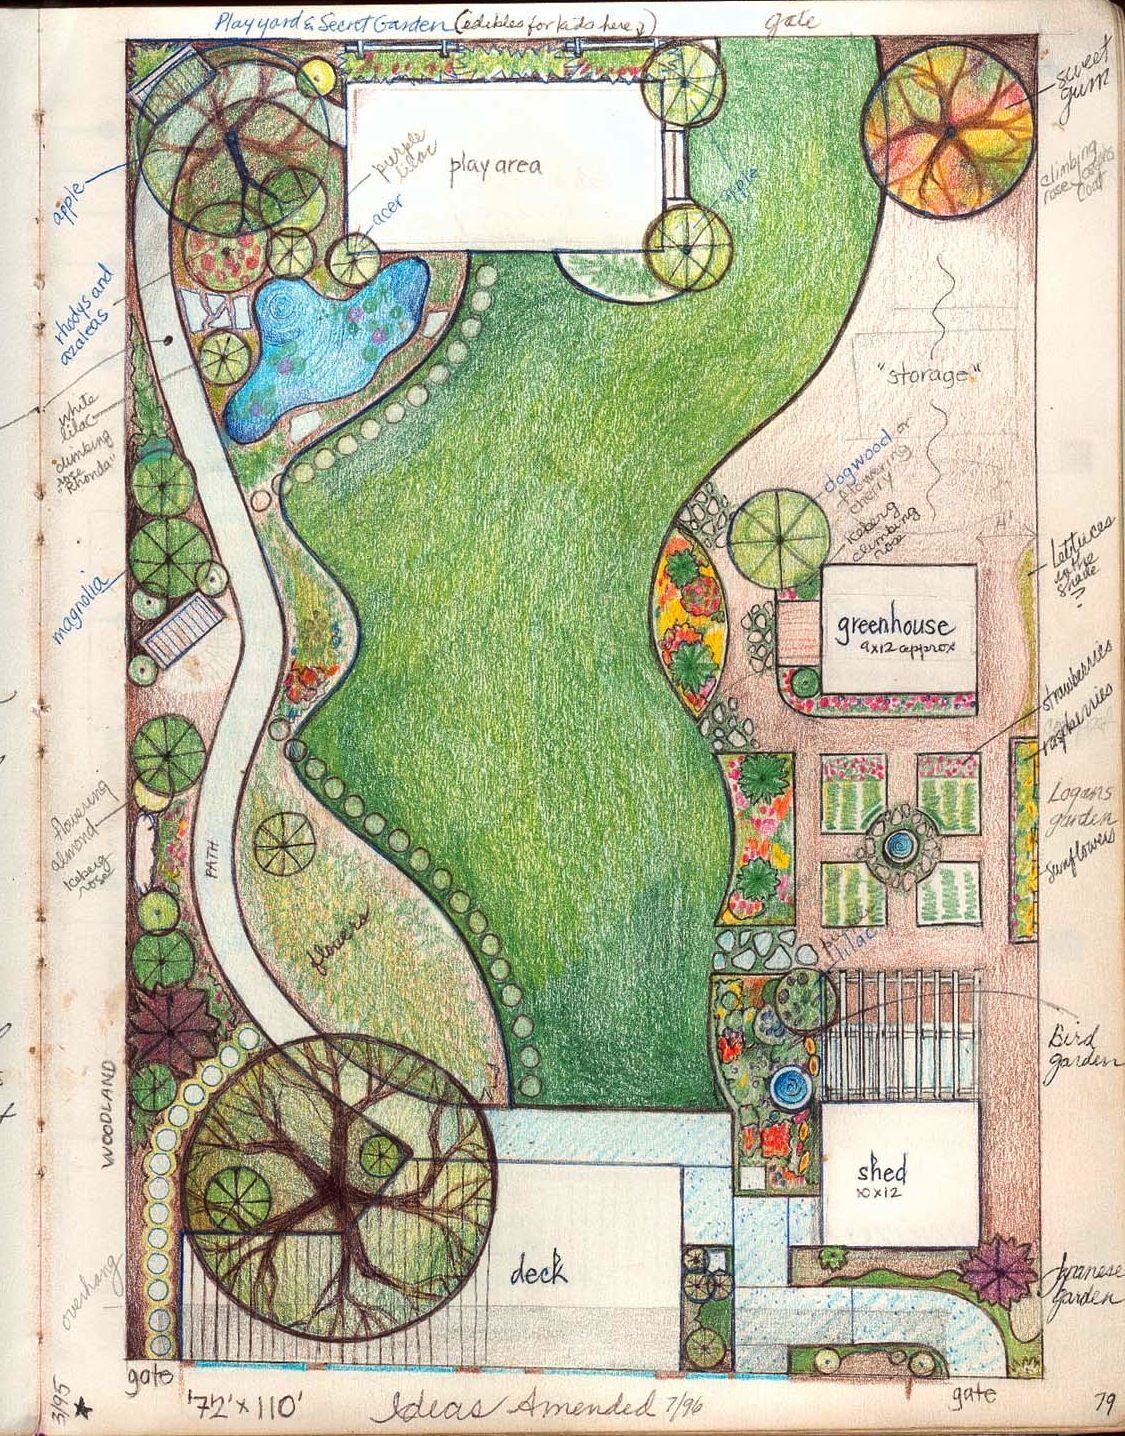 14 Some of the Coolest Ideas How to Improve Landscape Design Plans Backyard -   16 garden design Luxury landscapes ideas